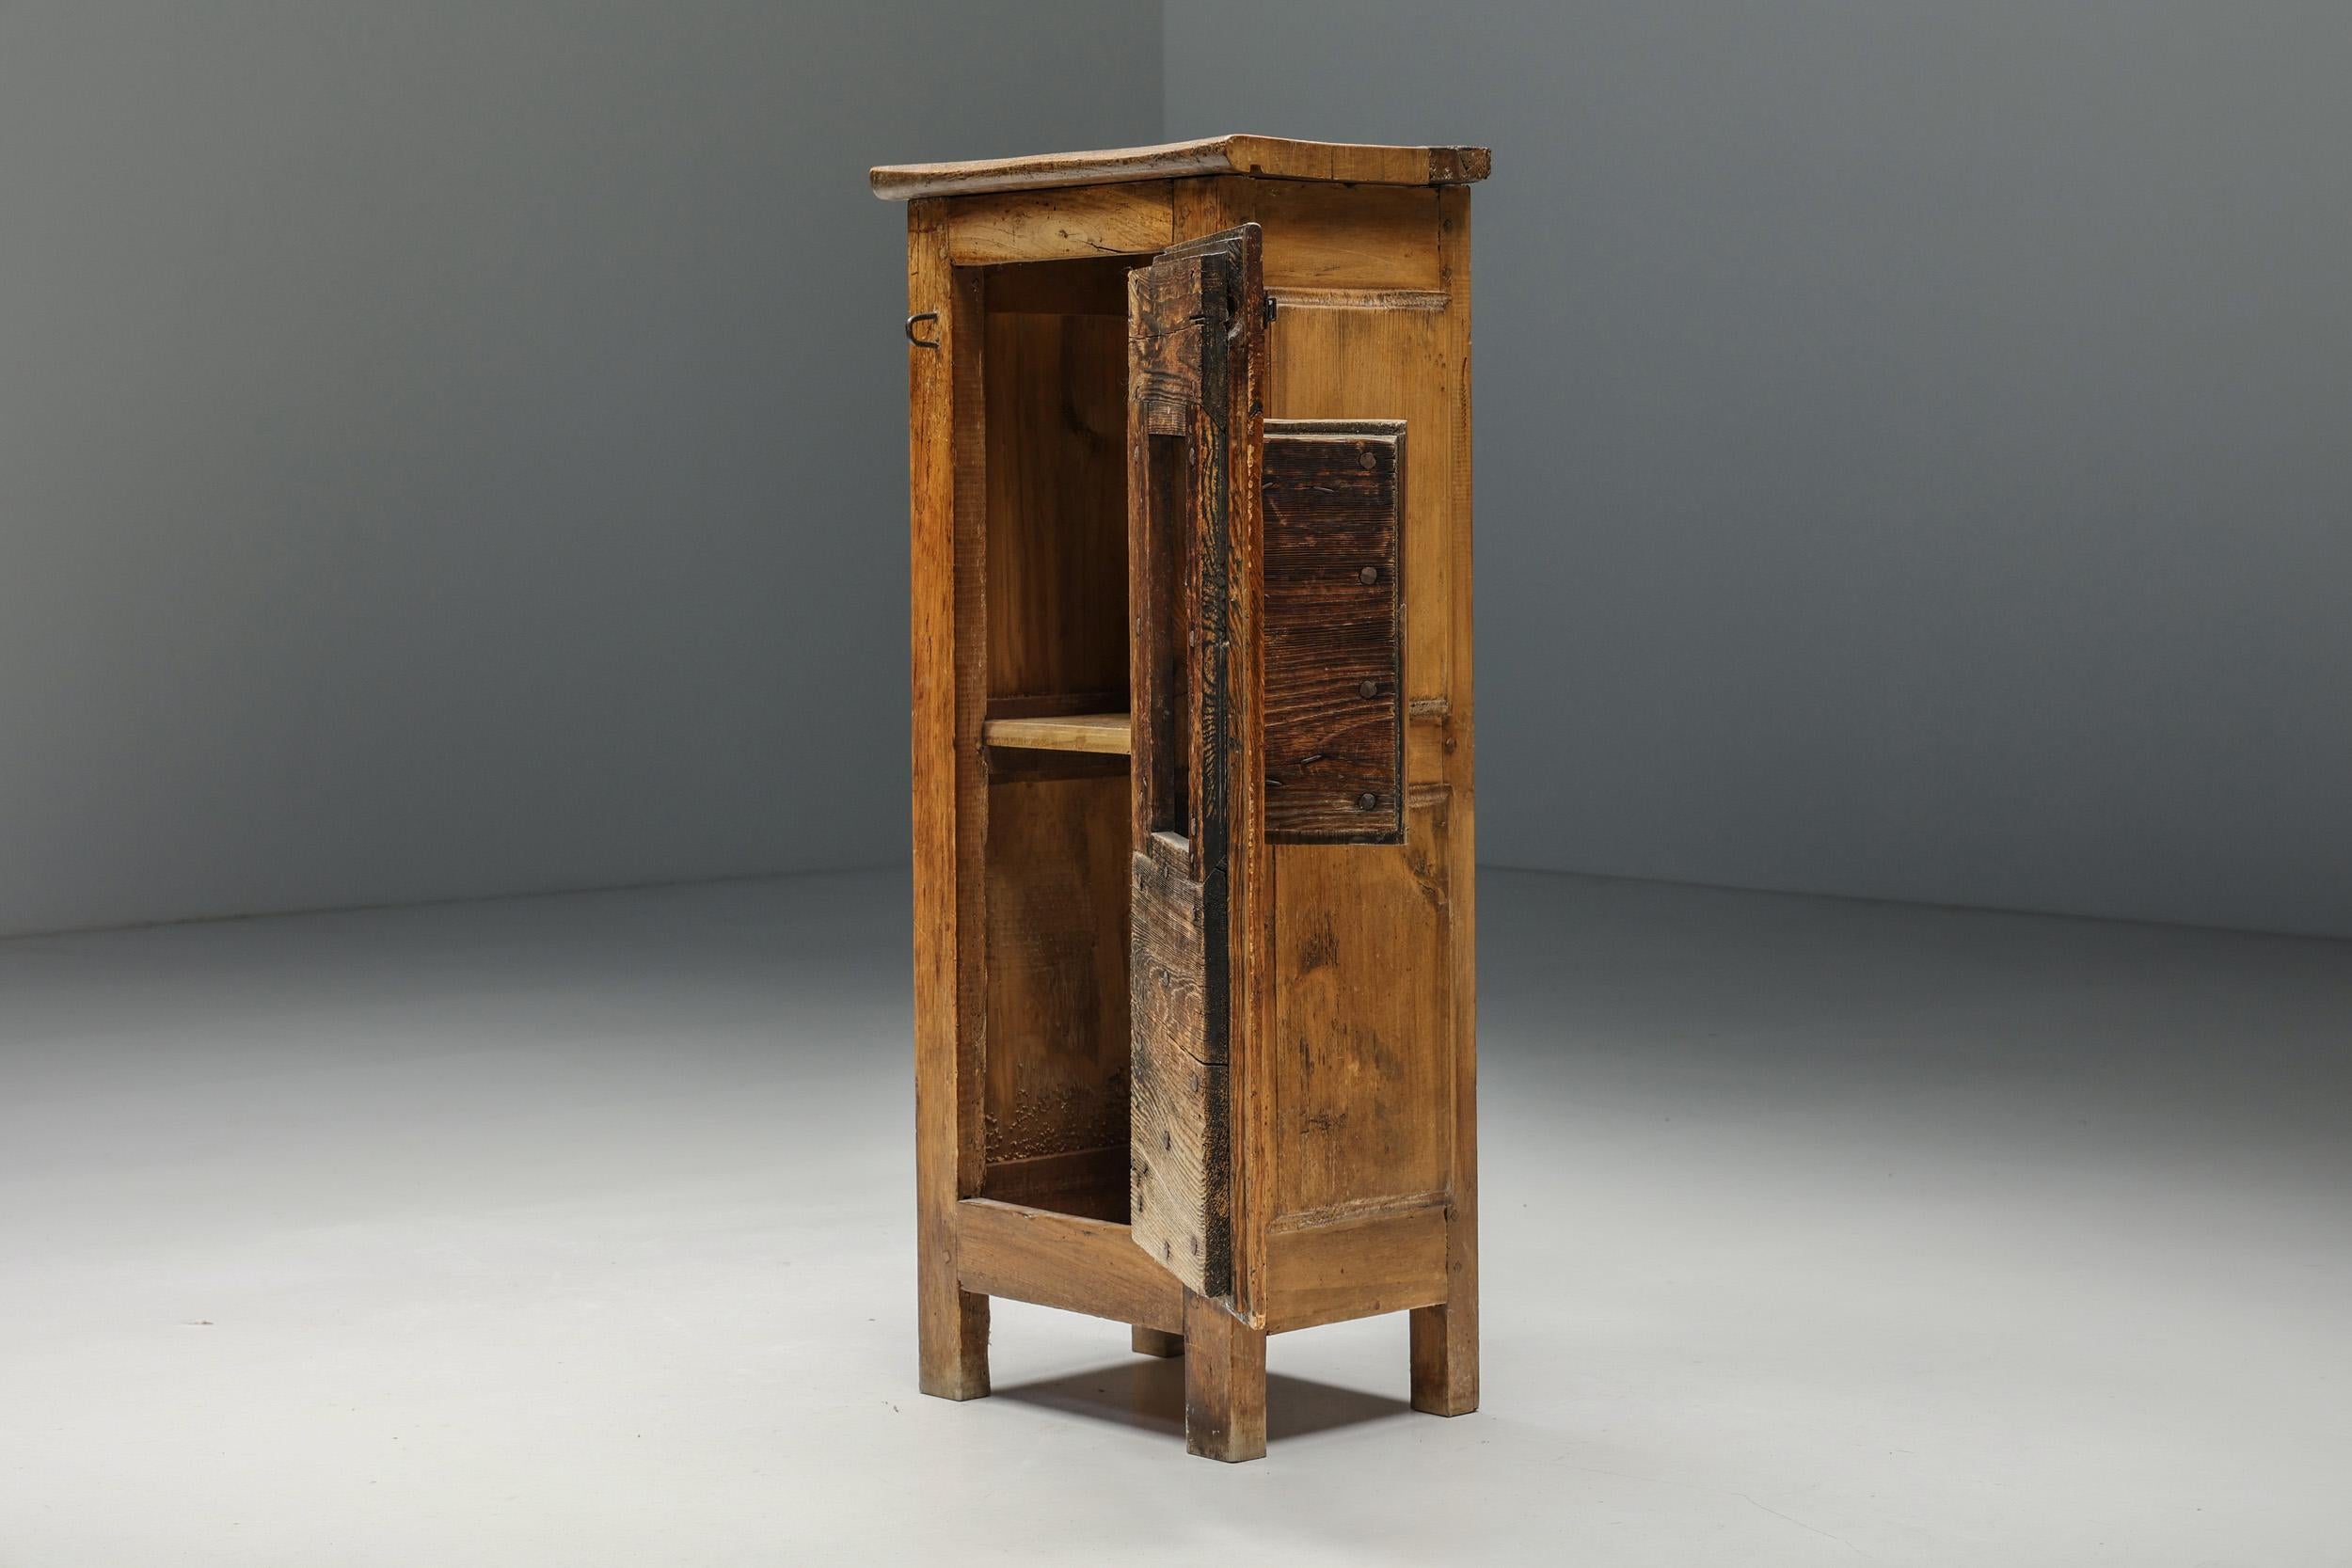 Rustic Robust Cabinet, Confiturier, Artisan Solid Wood, French Craftsmanship, ca 1900